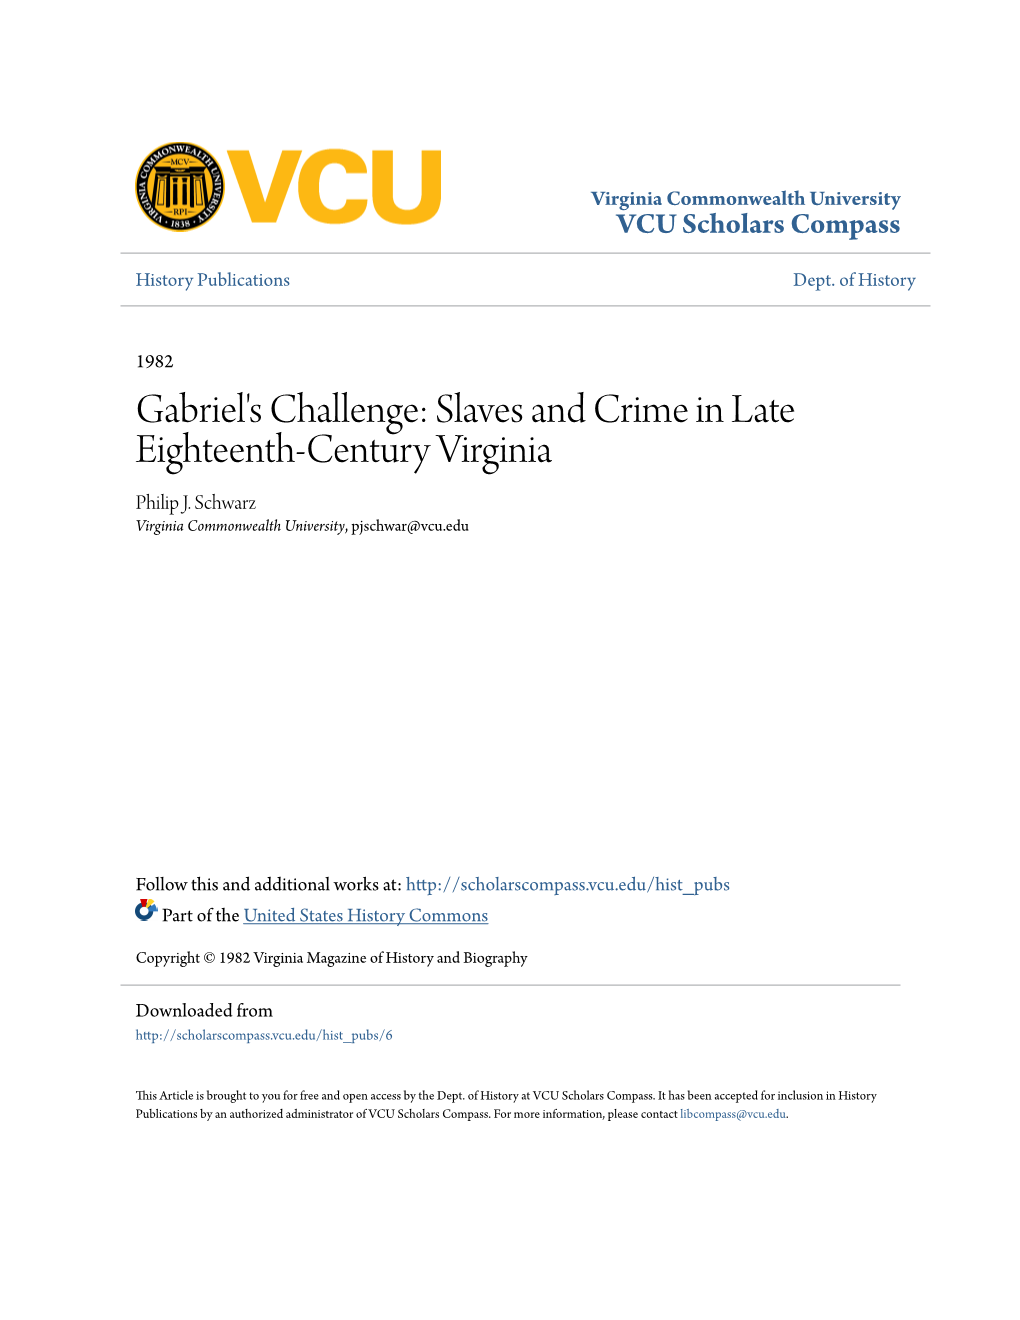 Gabriel's Challenge: Slaves and Crime in Late Eighteenth-Century Virginia Philip J